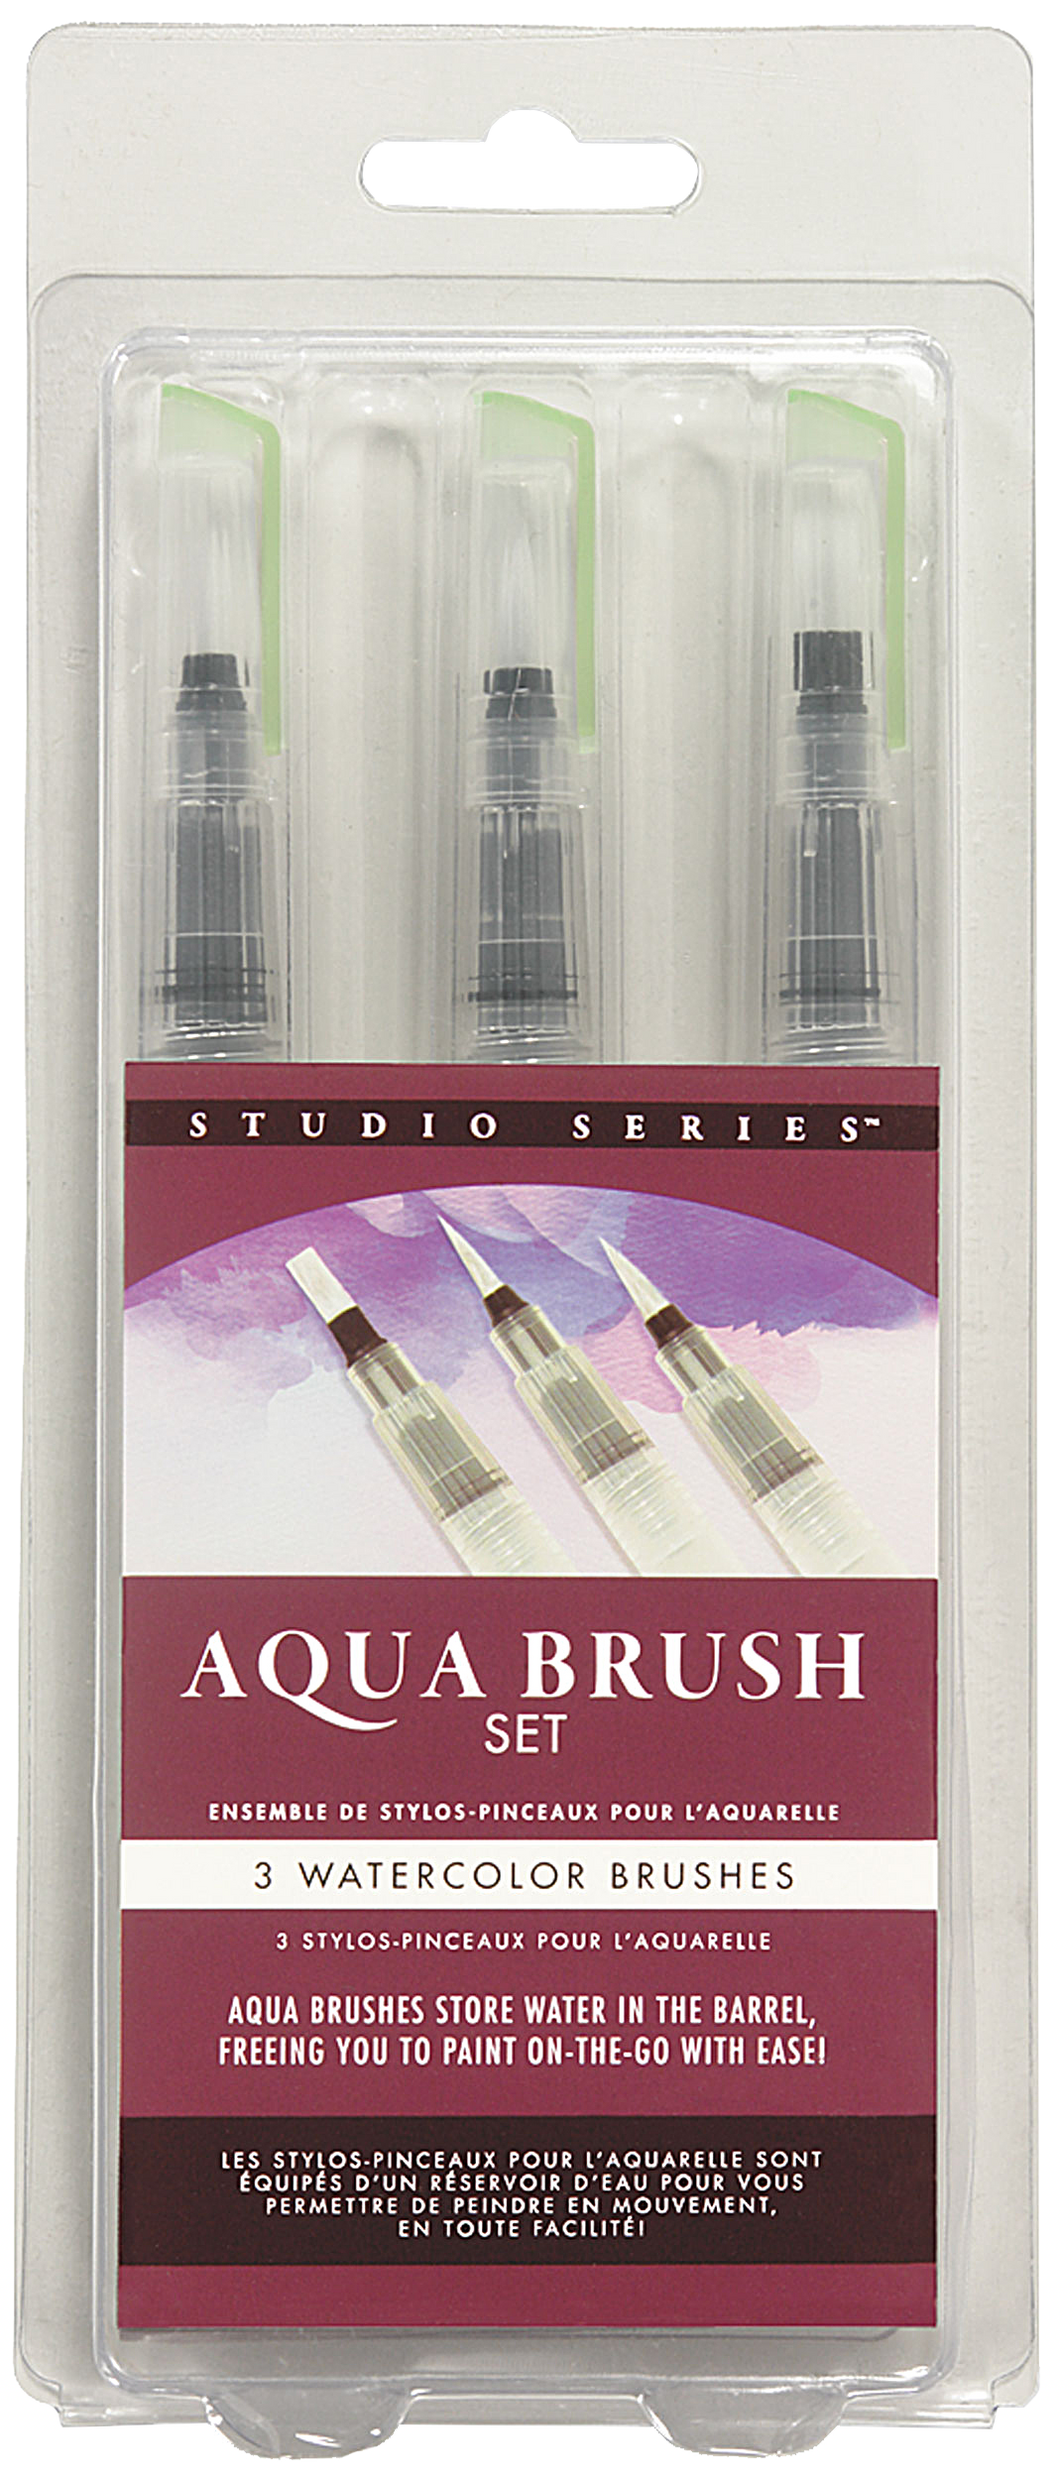 The STUDIO SERIES Aqua Brushes in their retail packaging.